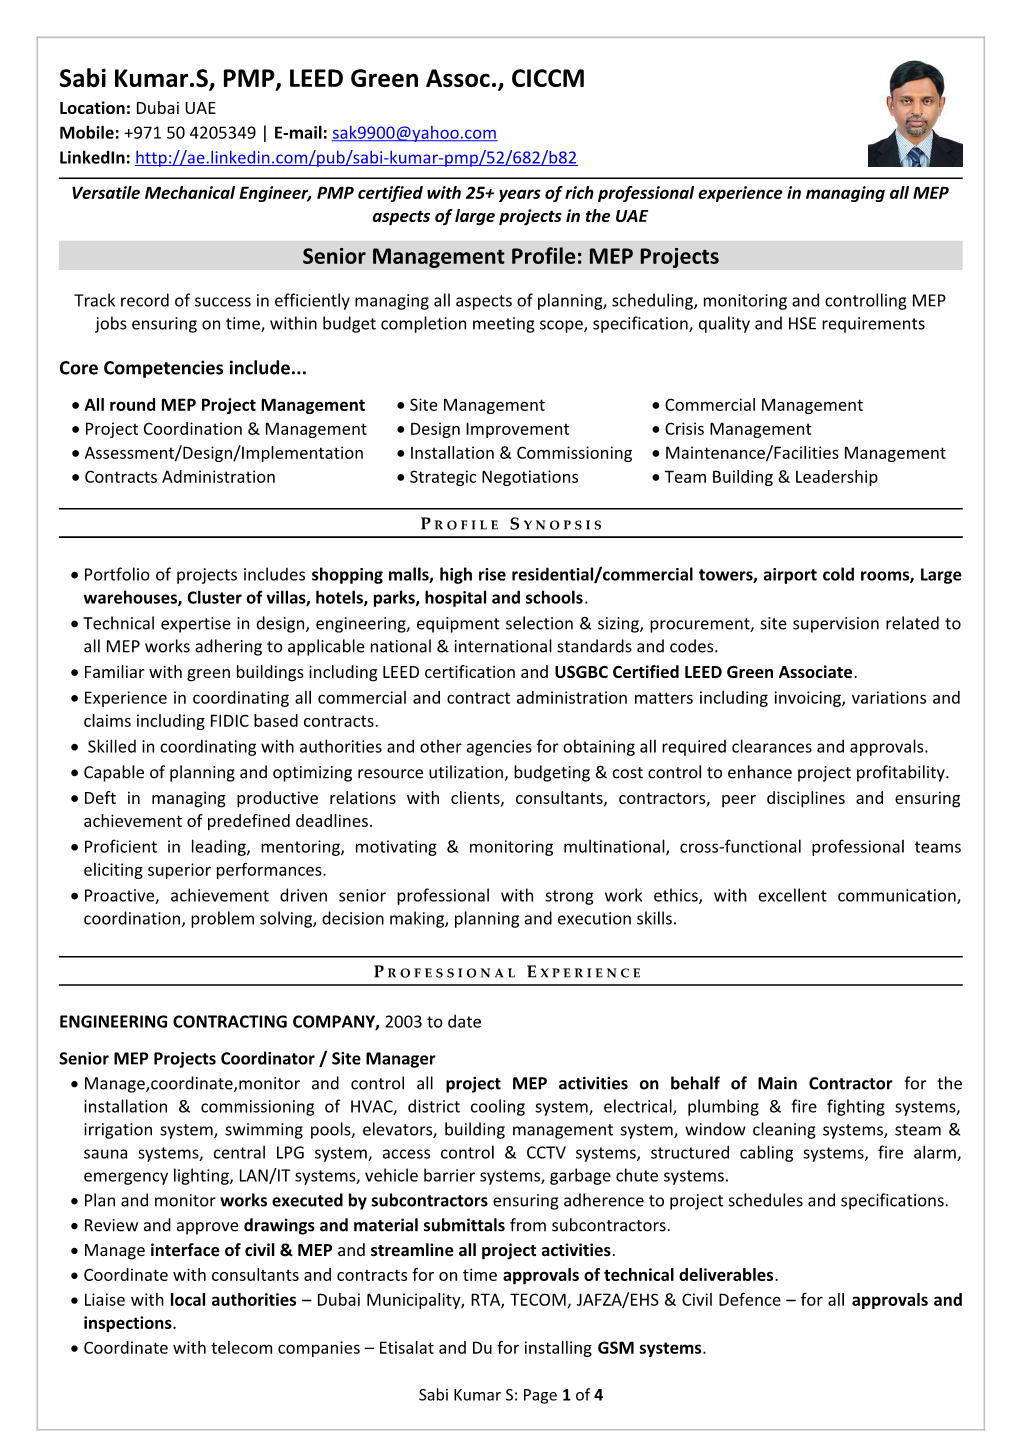 Senior Management Profile: MEP Projects